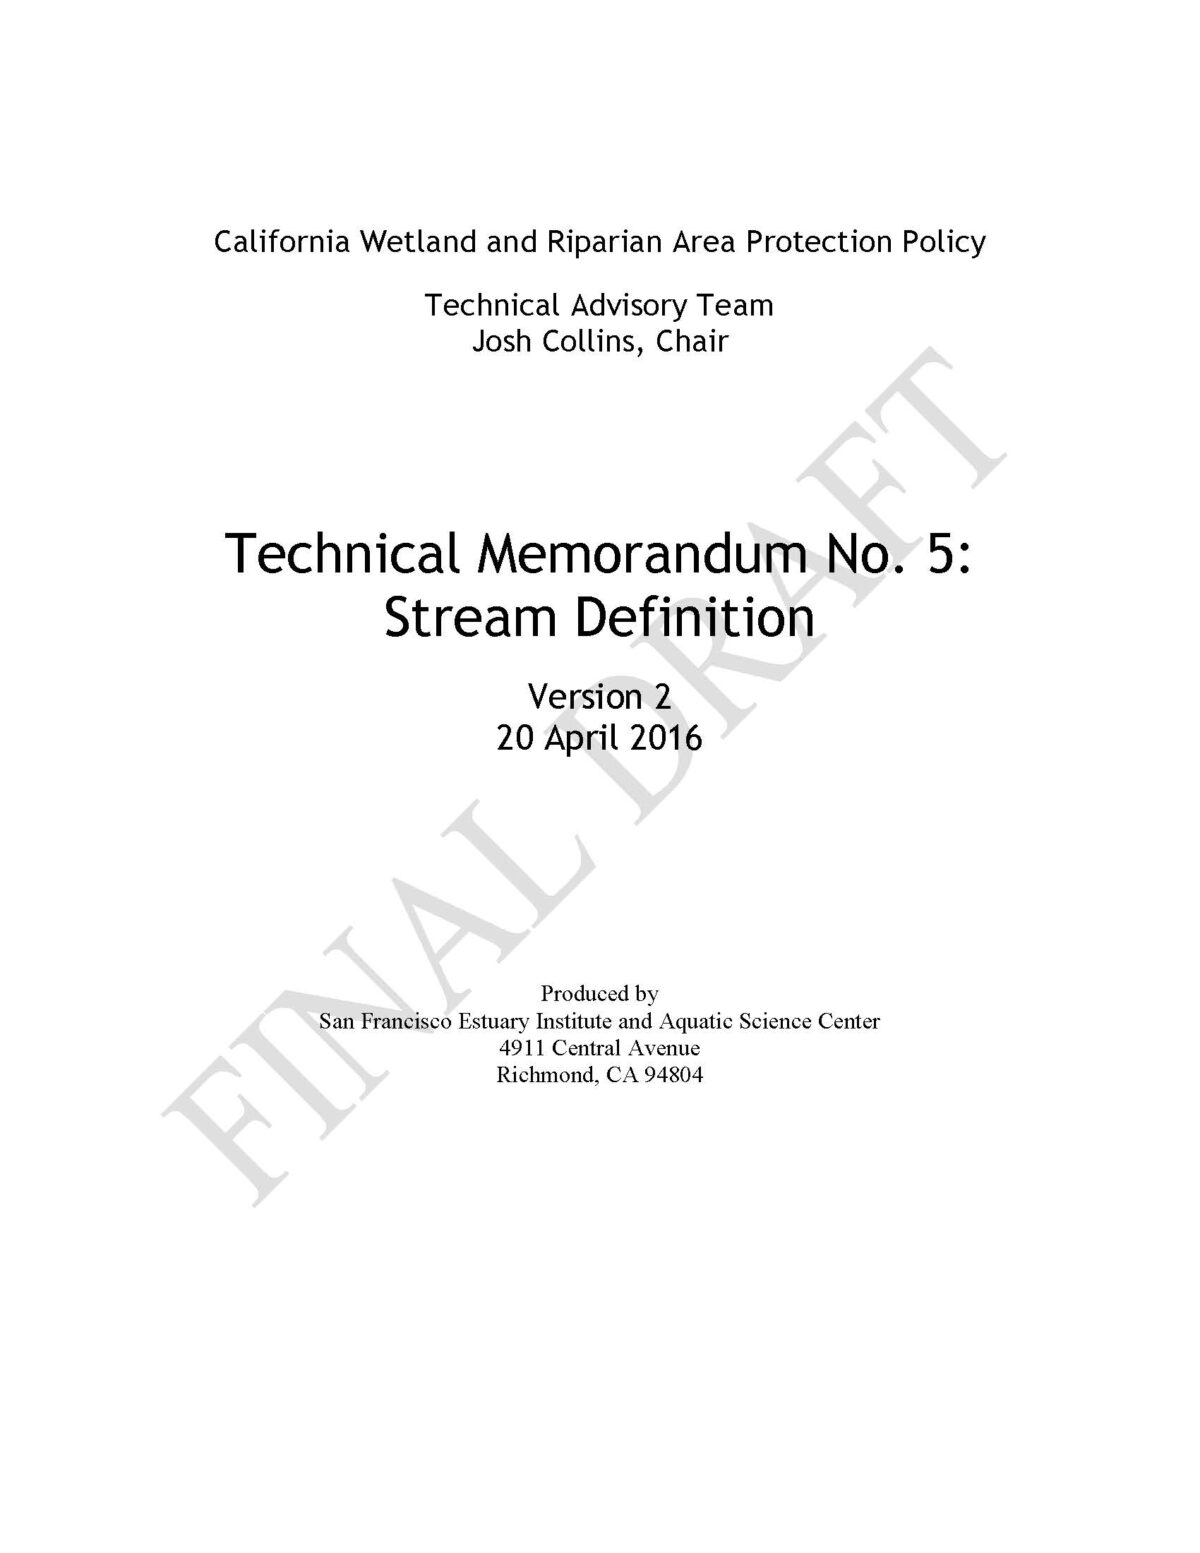 California Wetland and Riparian Area Protection Policy Technical Memorandum No. 5: Stream Definition